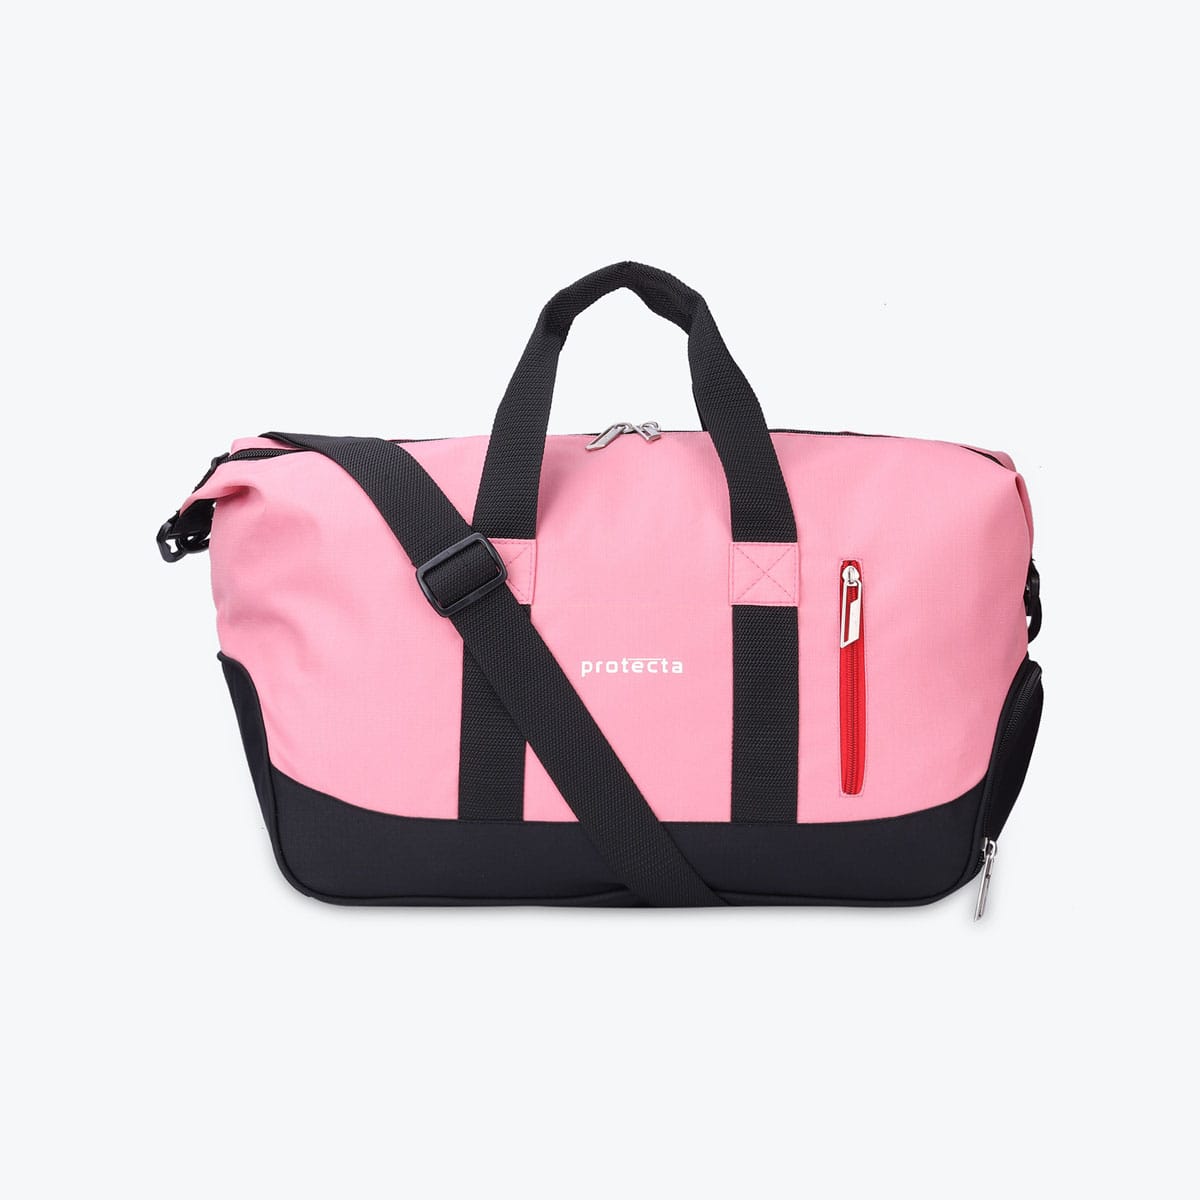 Reebok Pink Gym Bag Travel Bag | Pink gym bags, Pink gym, Bags